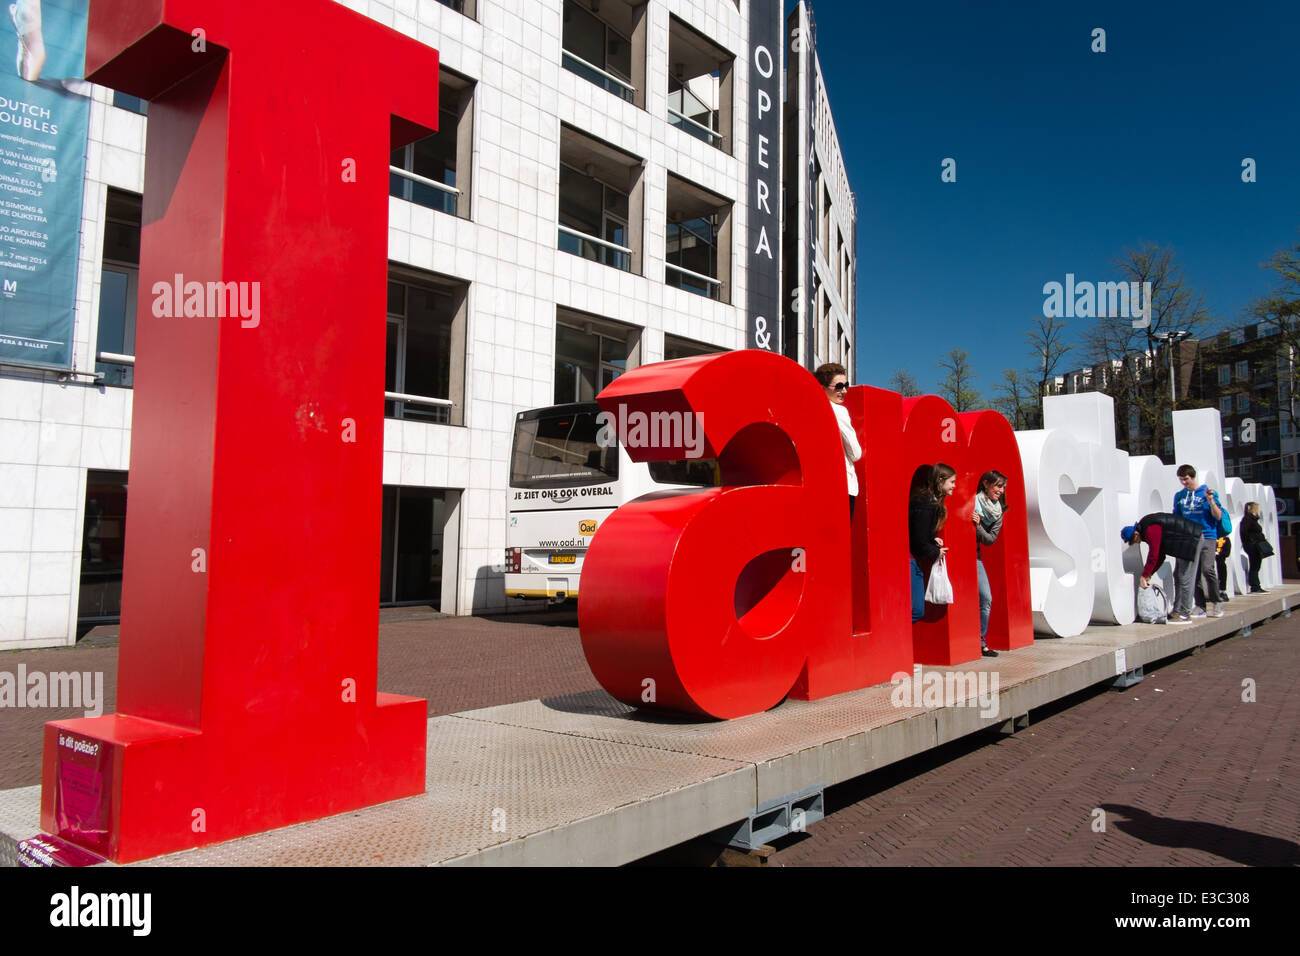 'I am Amsterdam' sign Stock Photo